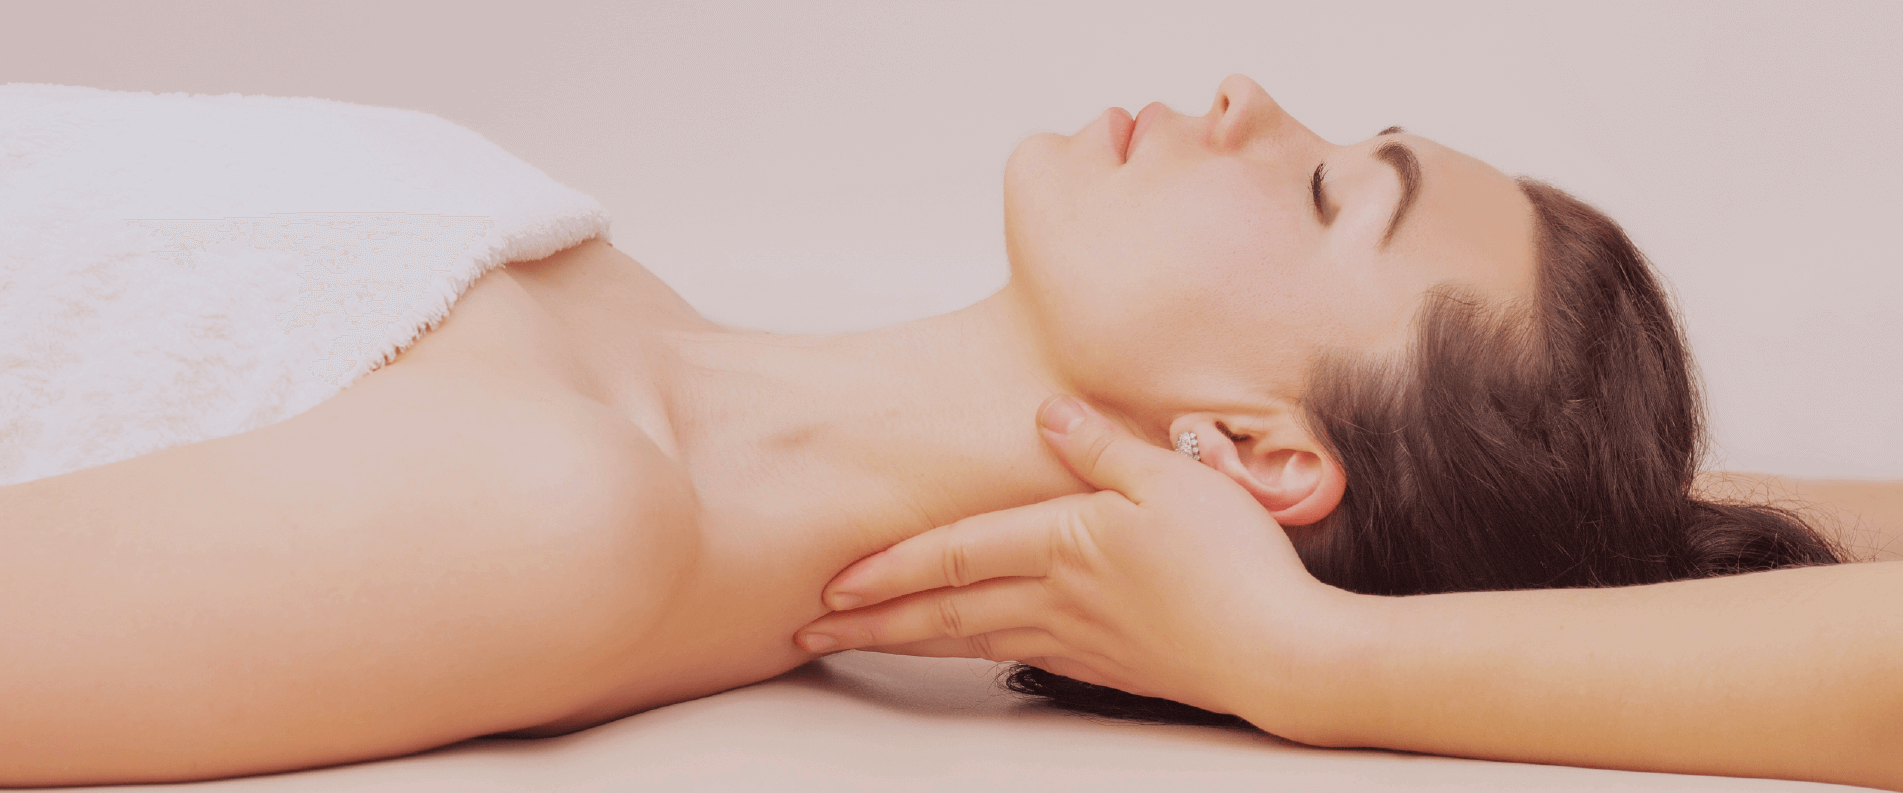 Салон массажа Imperial Massage в Кишиневе